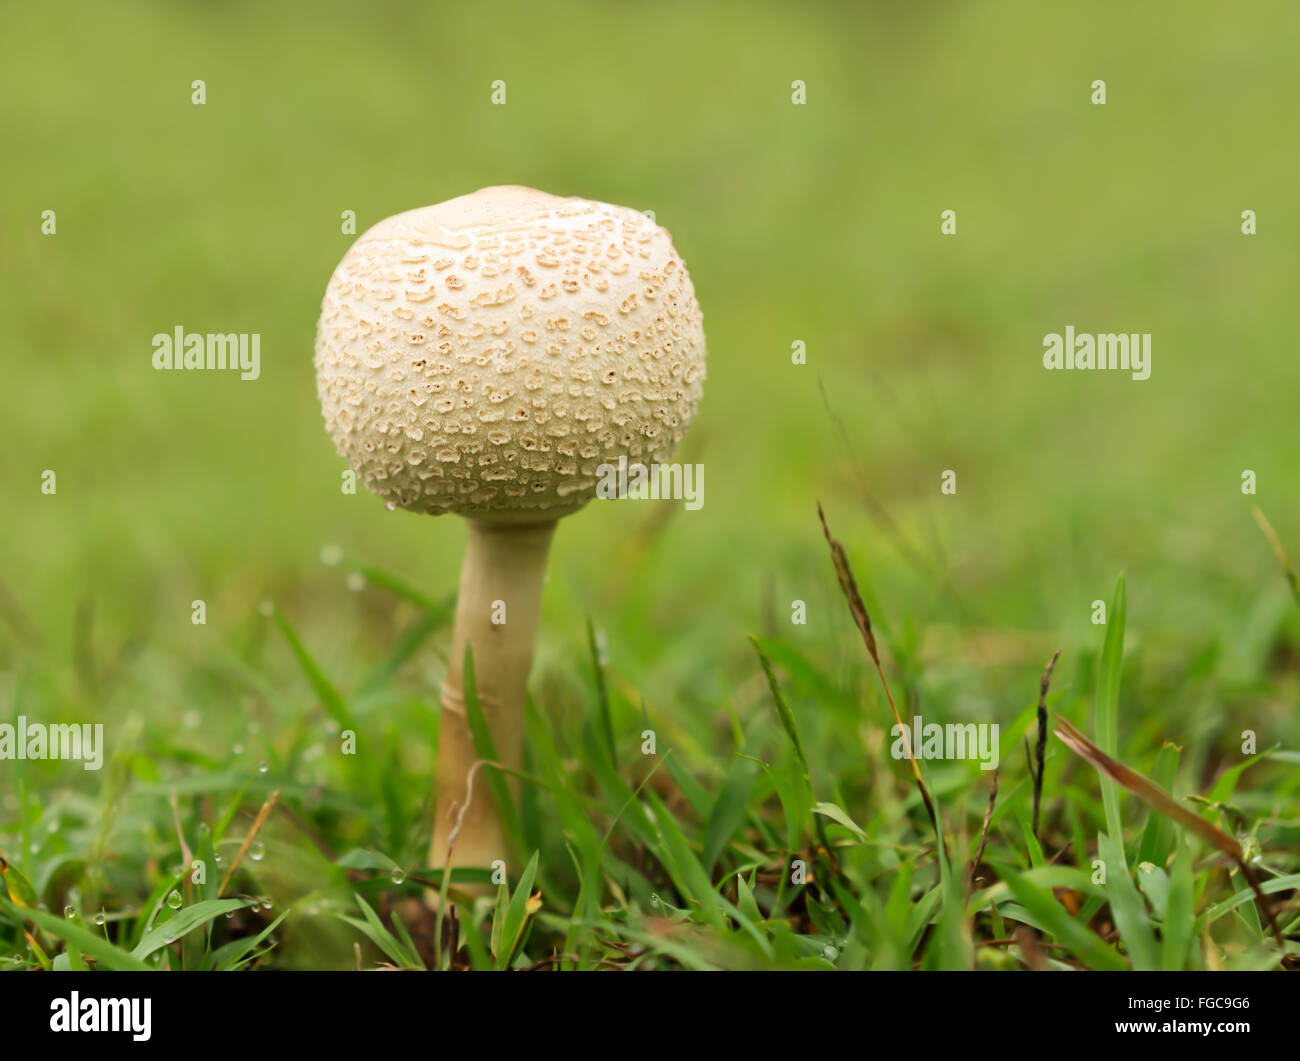 Australia, Queensland new young mushroom growing through wet green grass Stock Photo